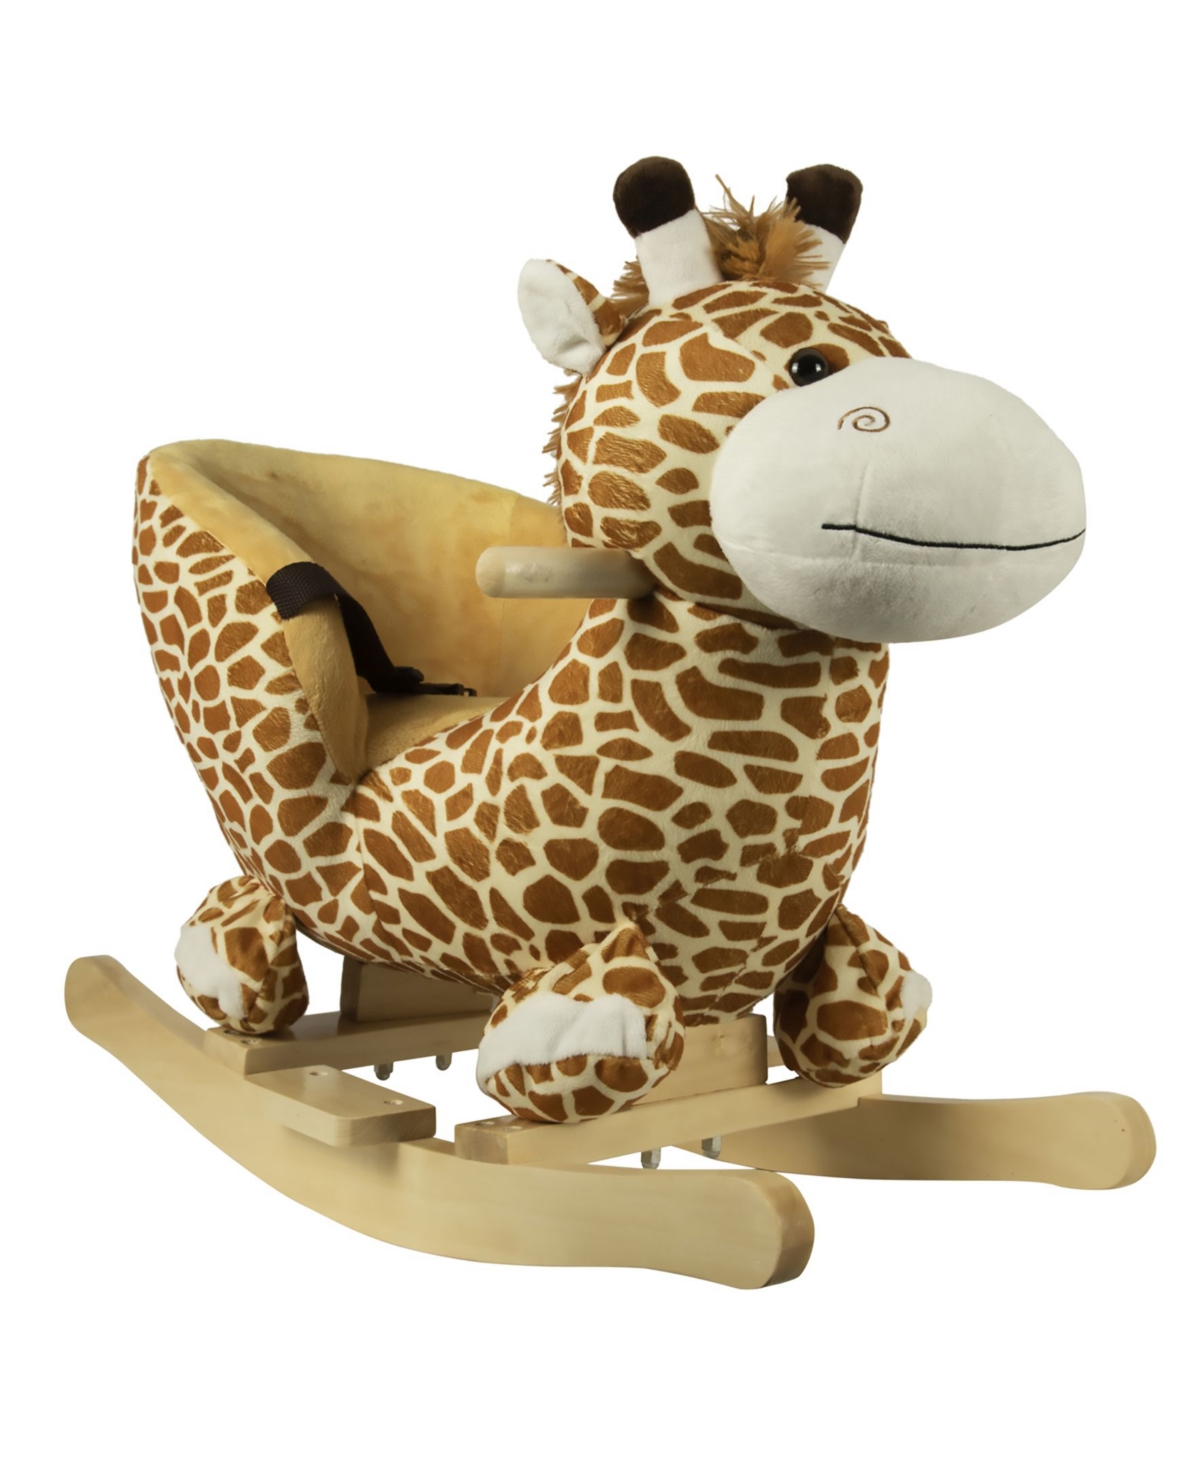 Ponyland Kids' Group Sales Giraffe Rocking Chair In Brown